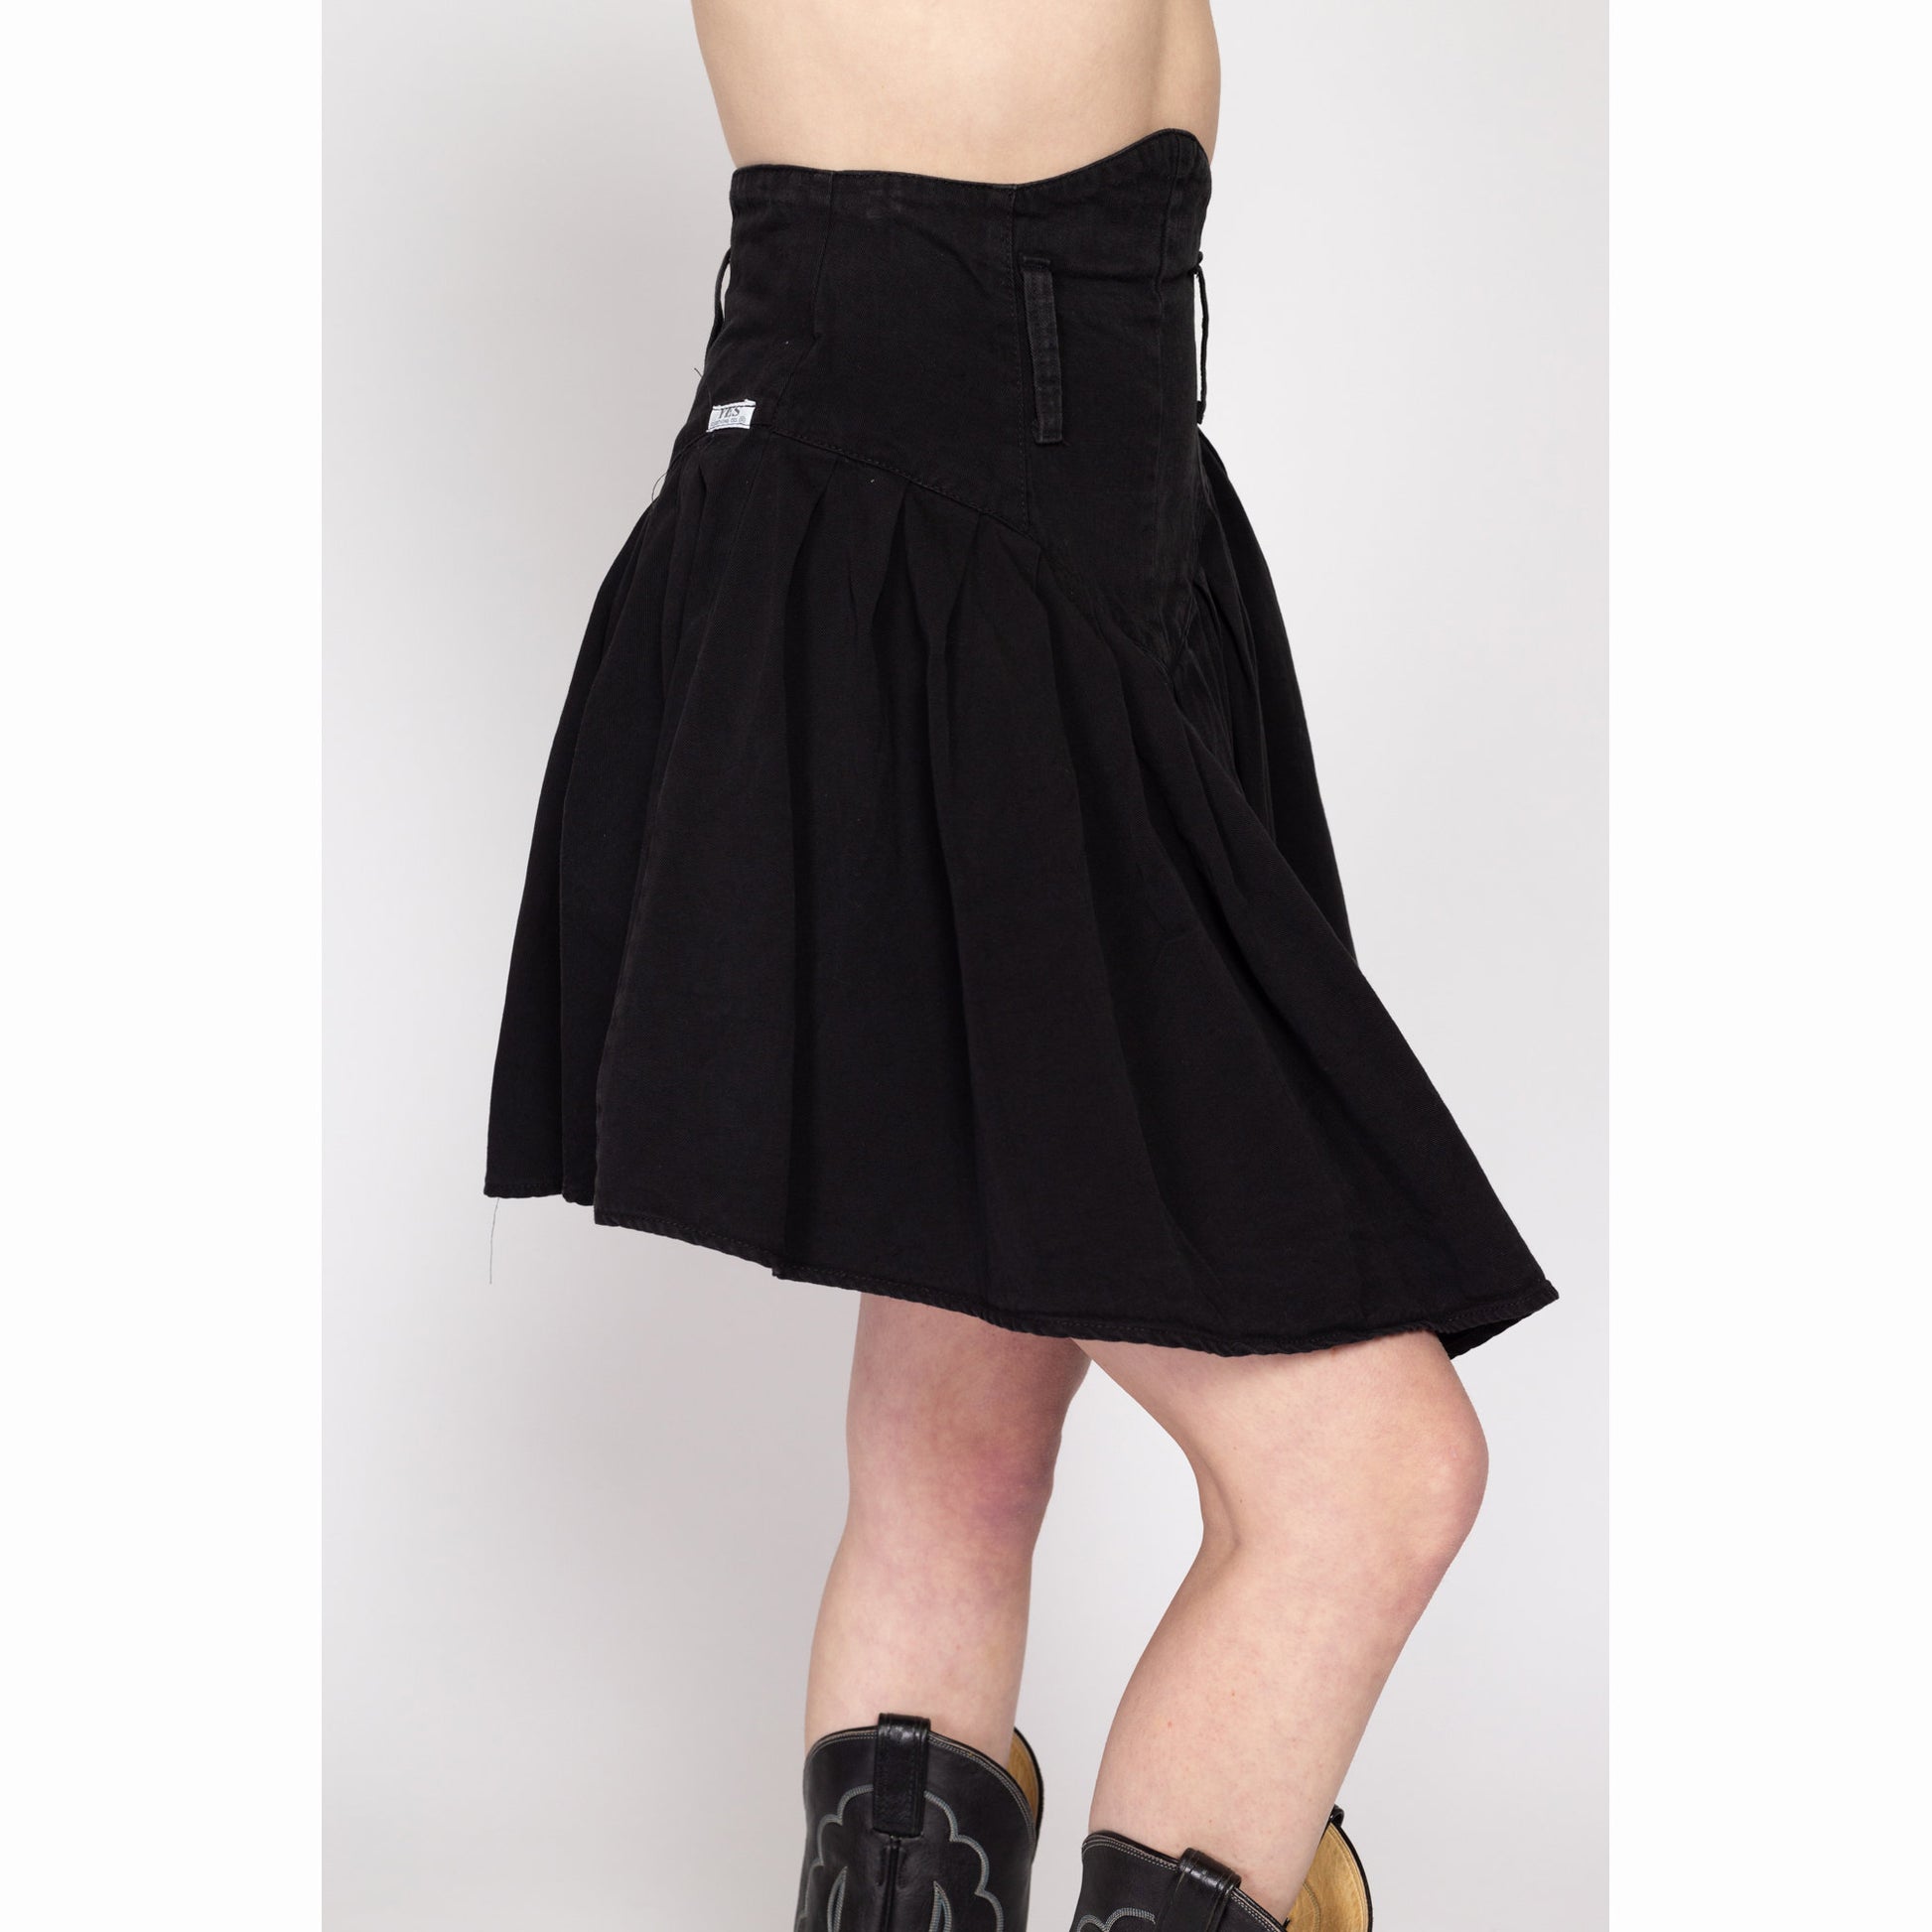 Small 80s Gothic Western Black Denim Mini Skirt 26.5" | Vintage Pleated High Waisted Yoke Fit & Flare Jean Skirt